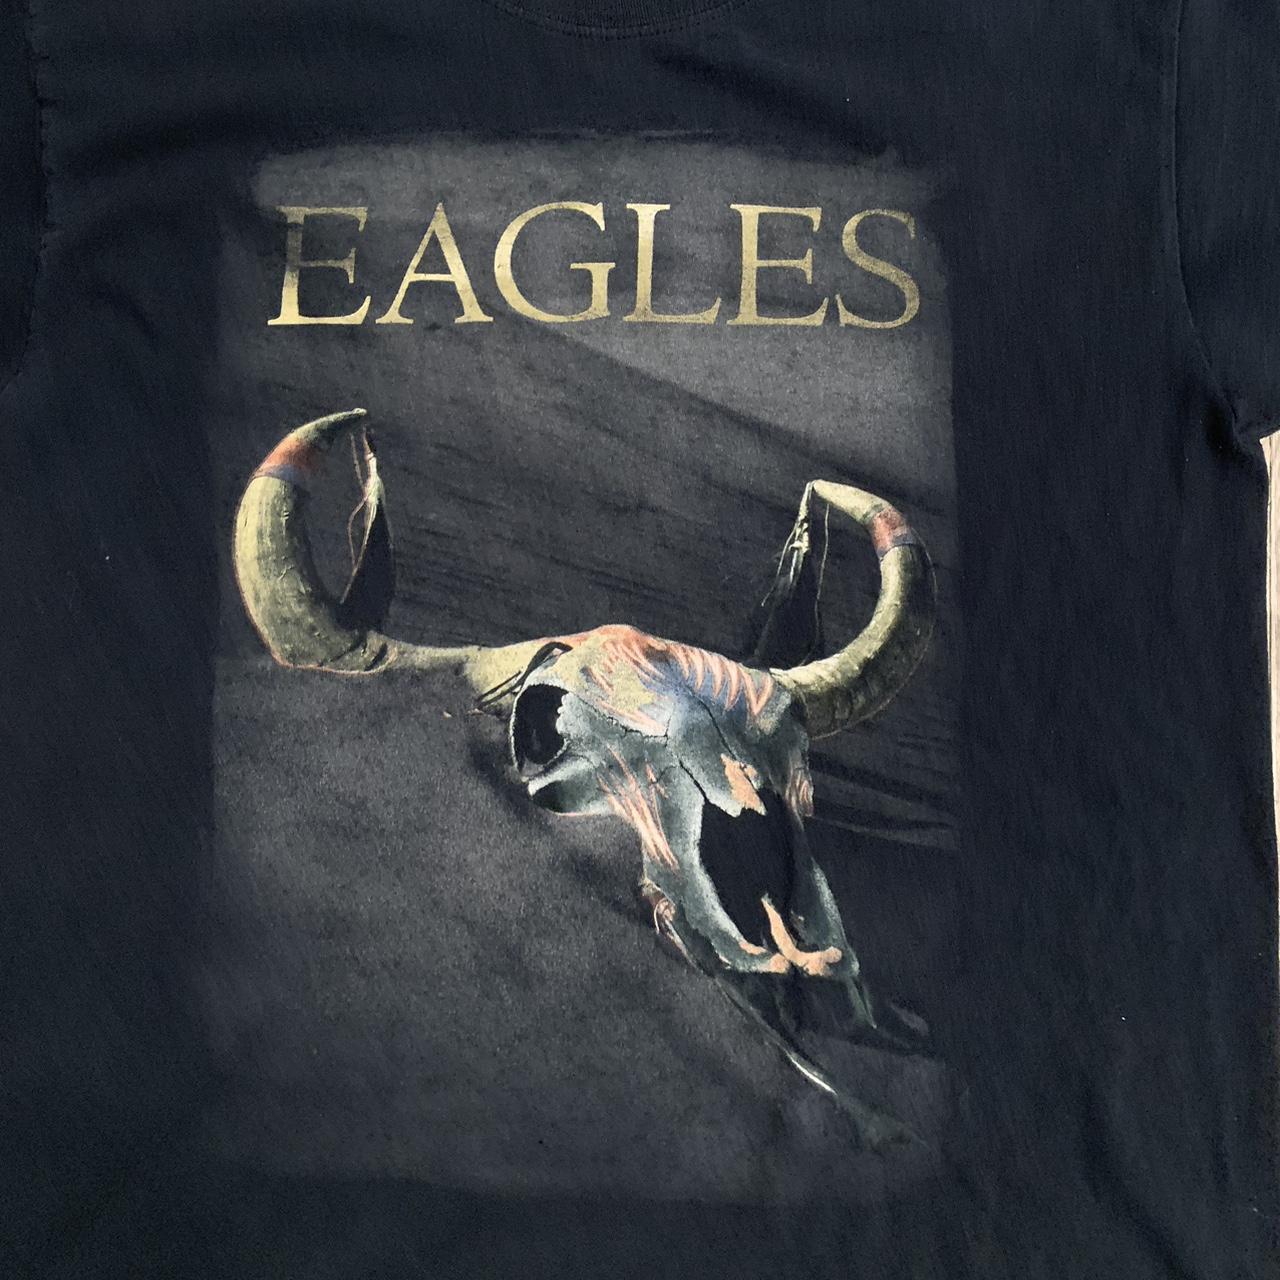 Eagles Band Tour Shirt Size L Black 2015 Cut tag - Depop